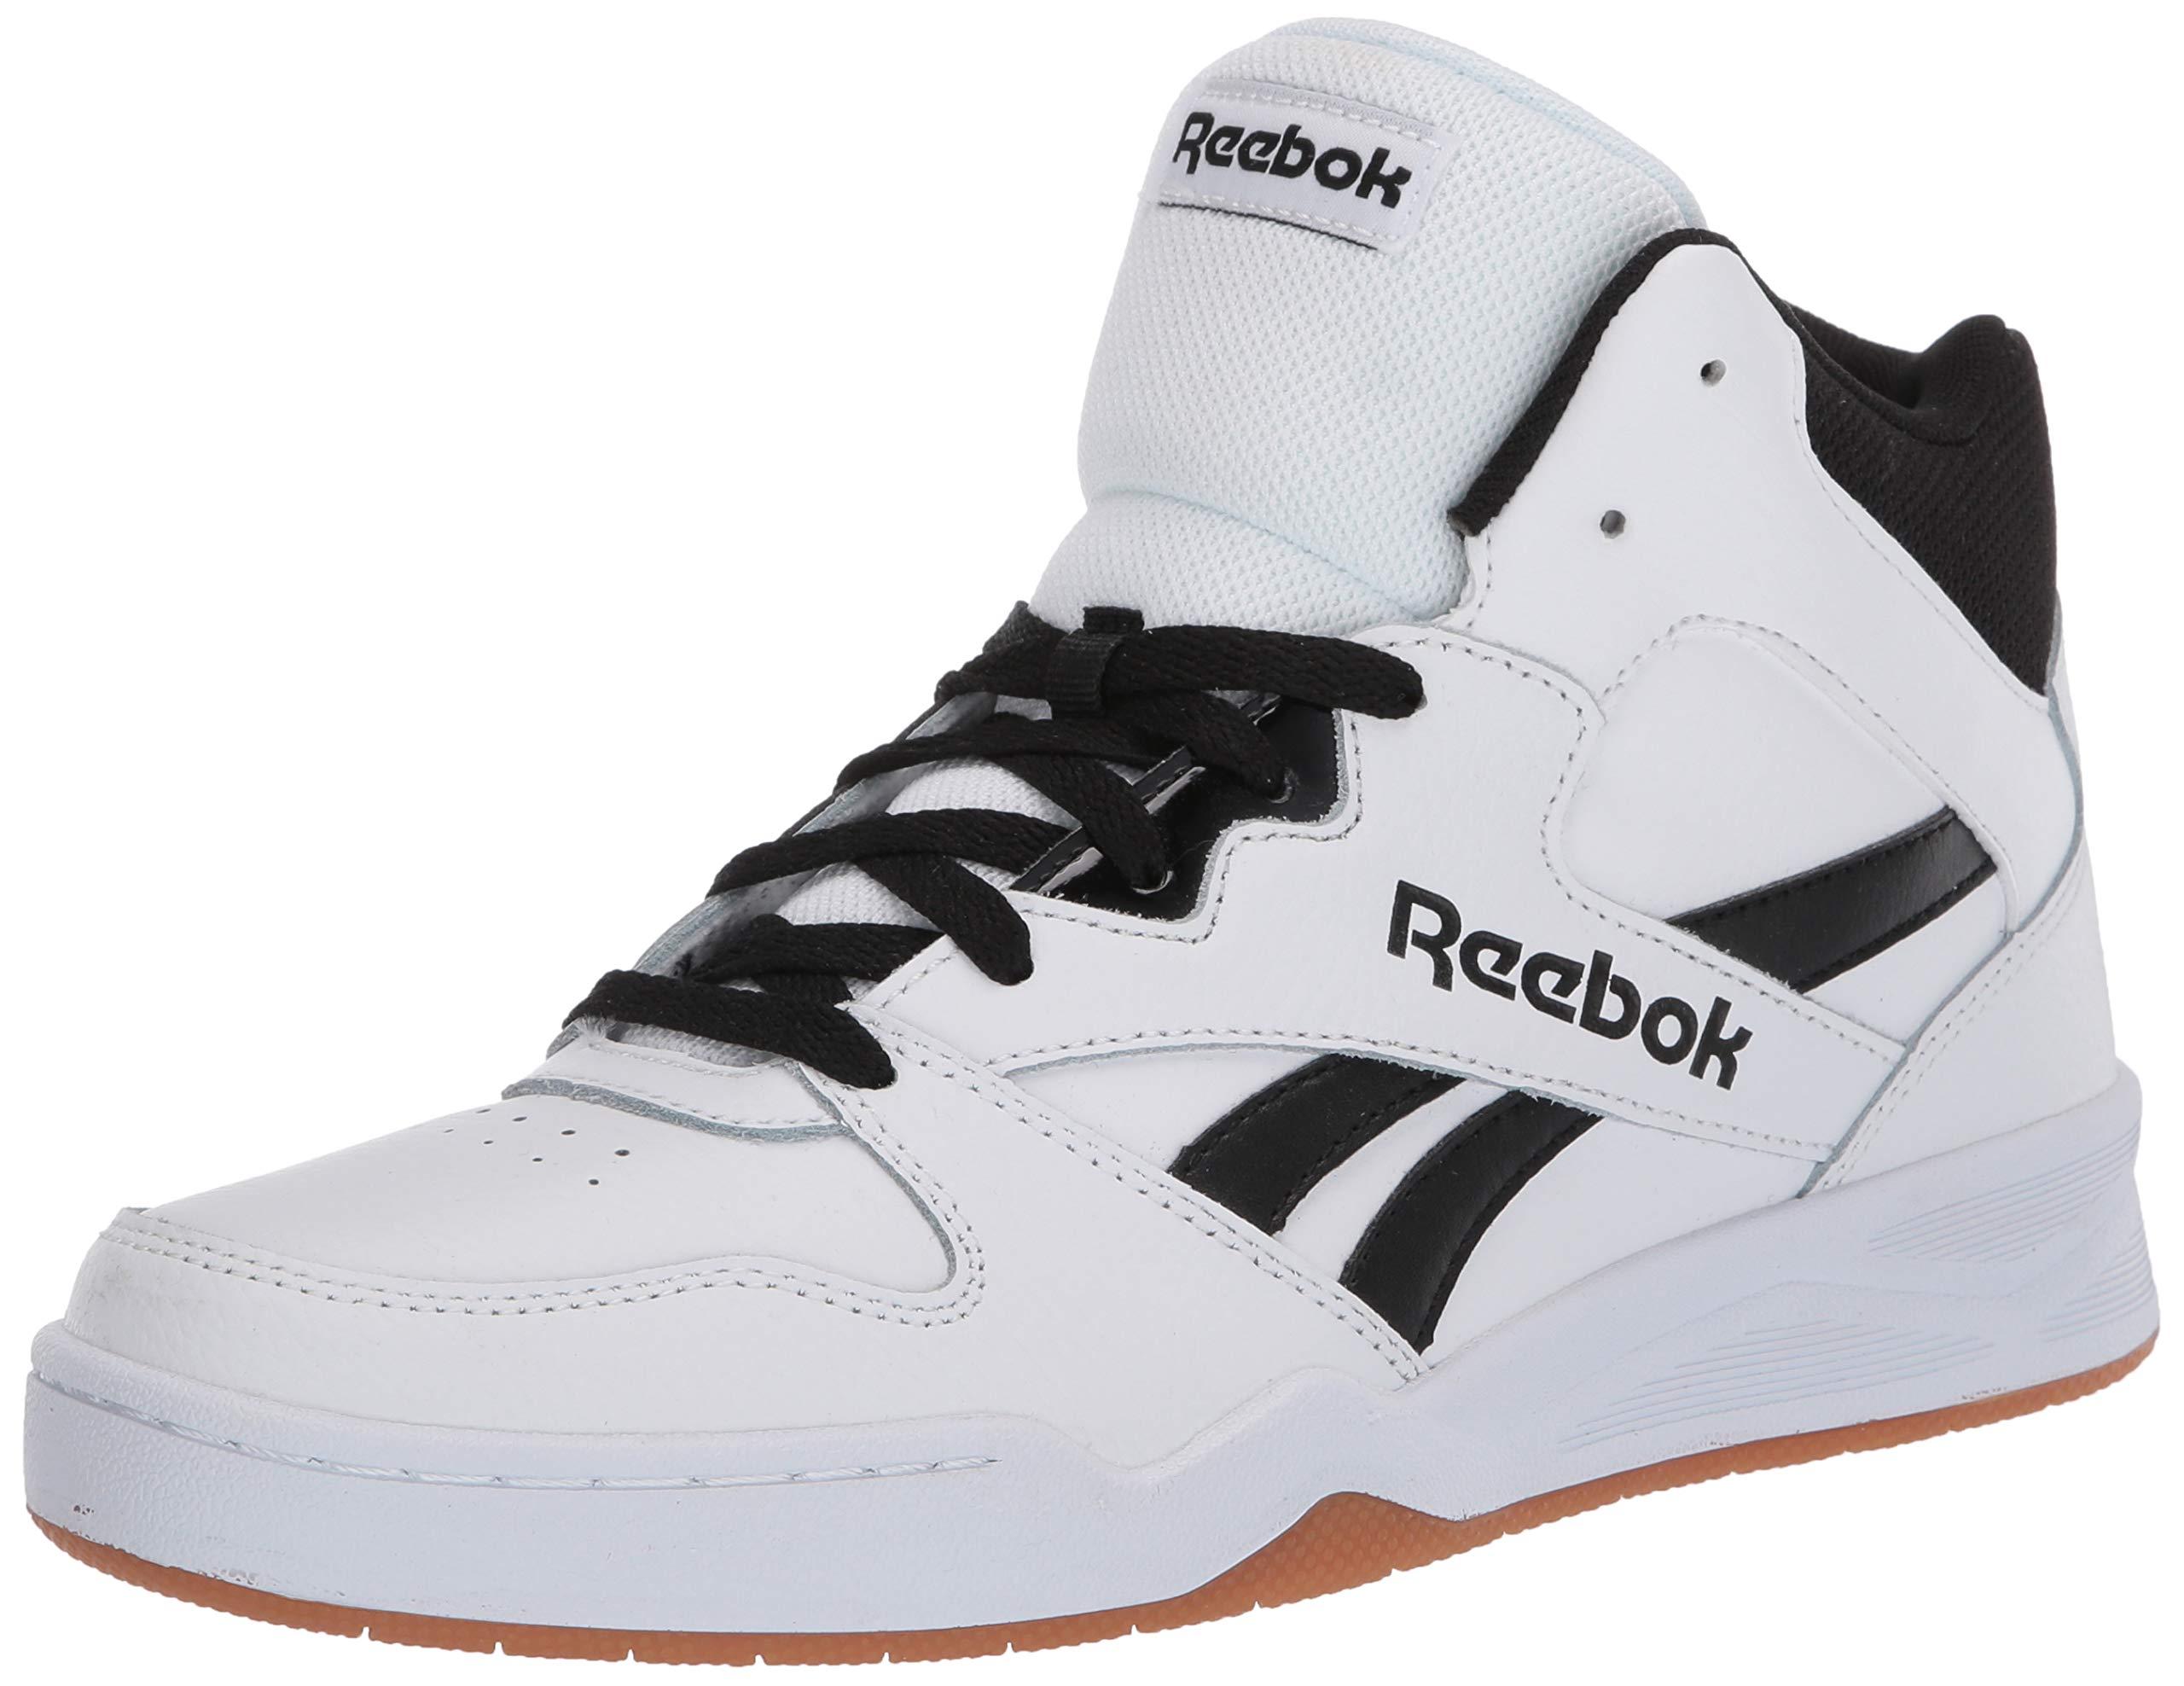 Reebok Basketball Shoes For Men